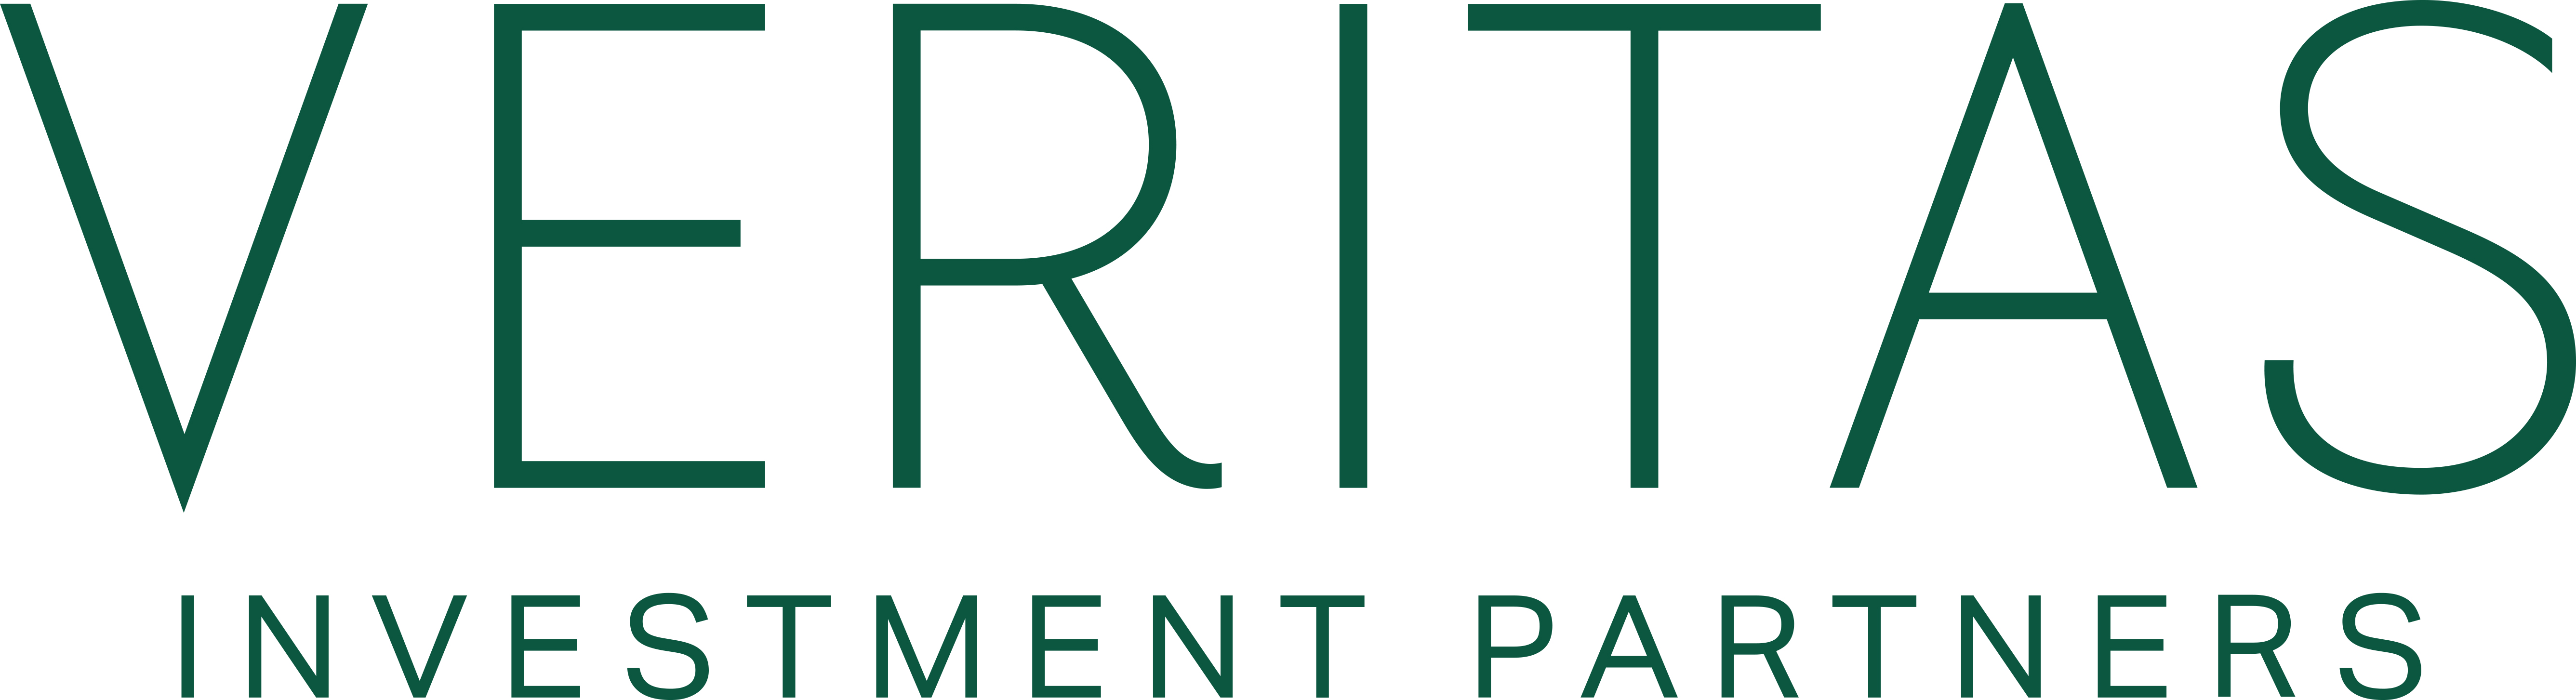 Veritas Investment Partners